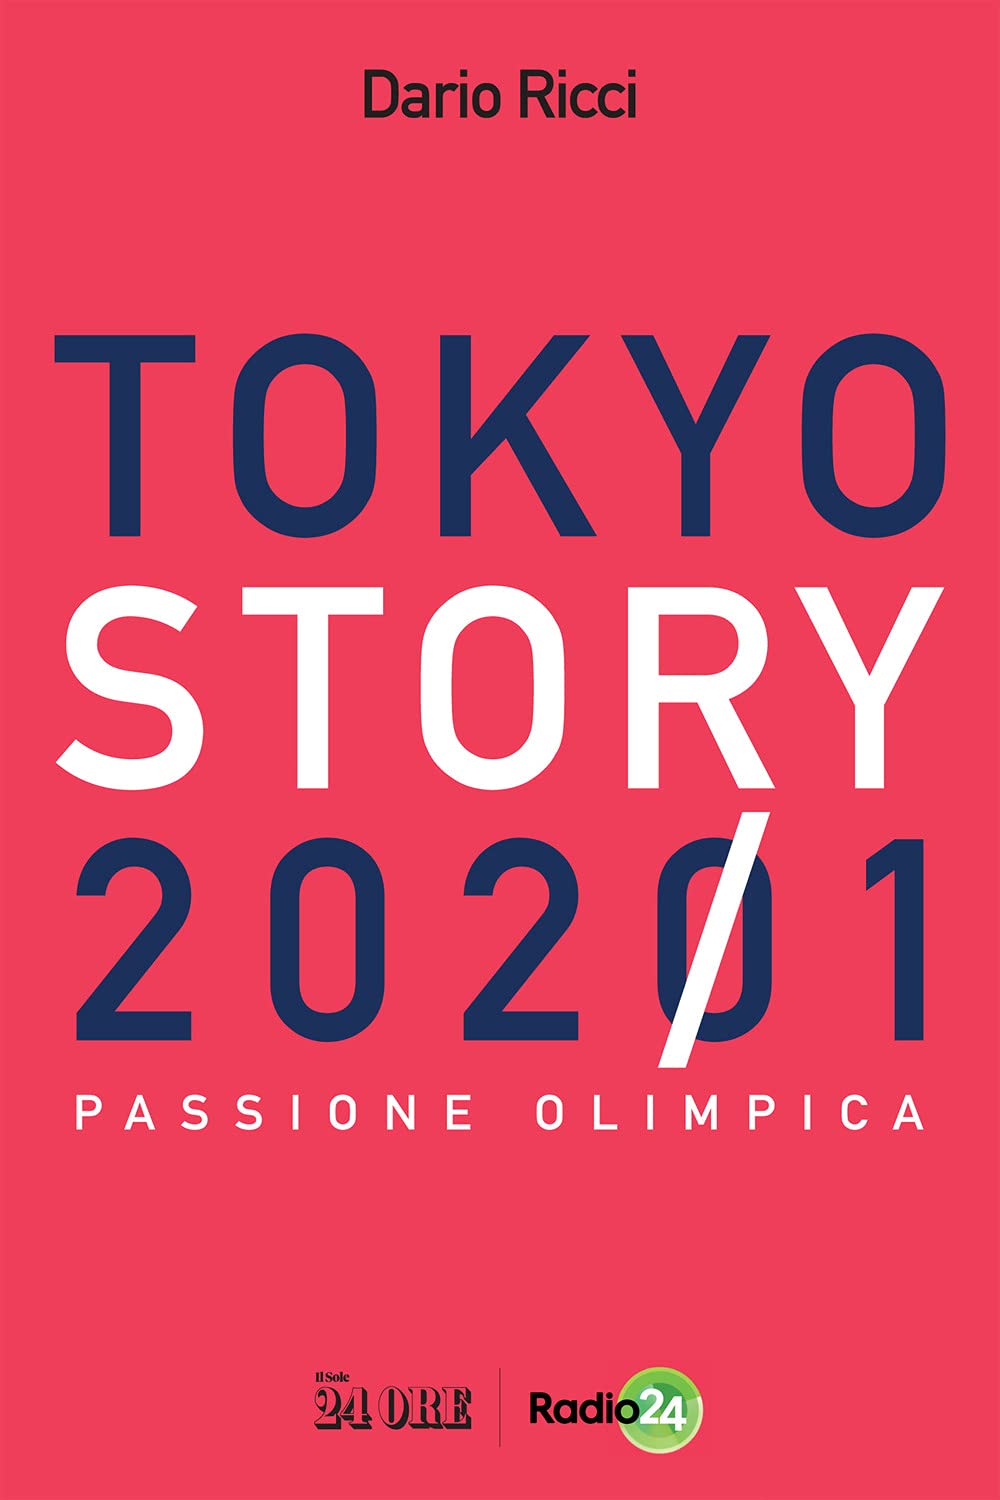 proposte a tema tokyo 2020 - tokyo story